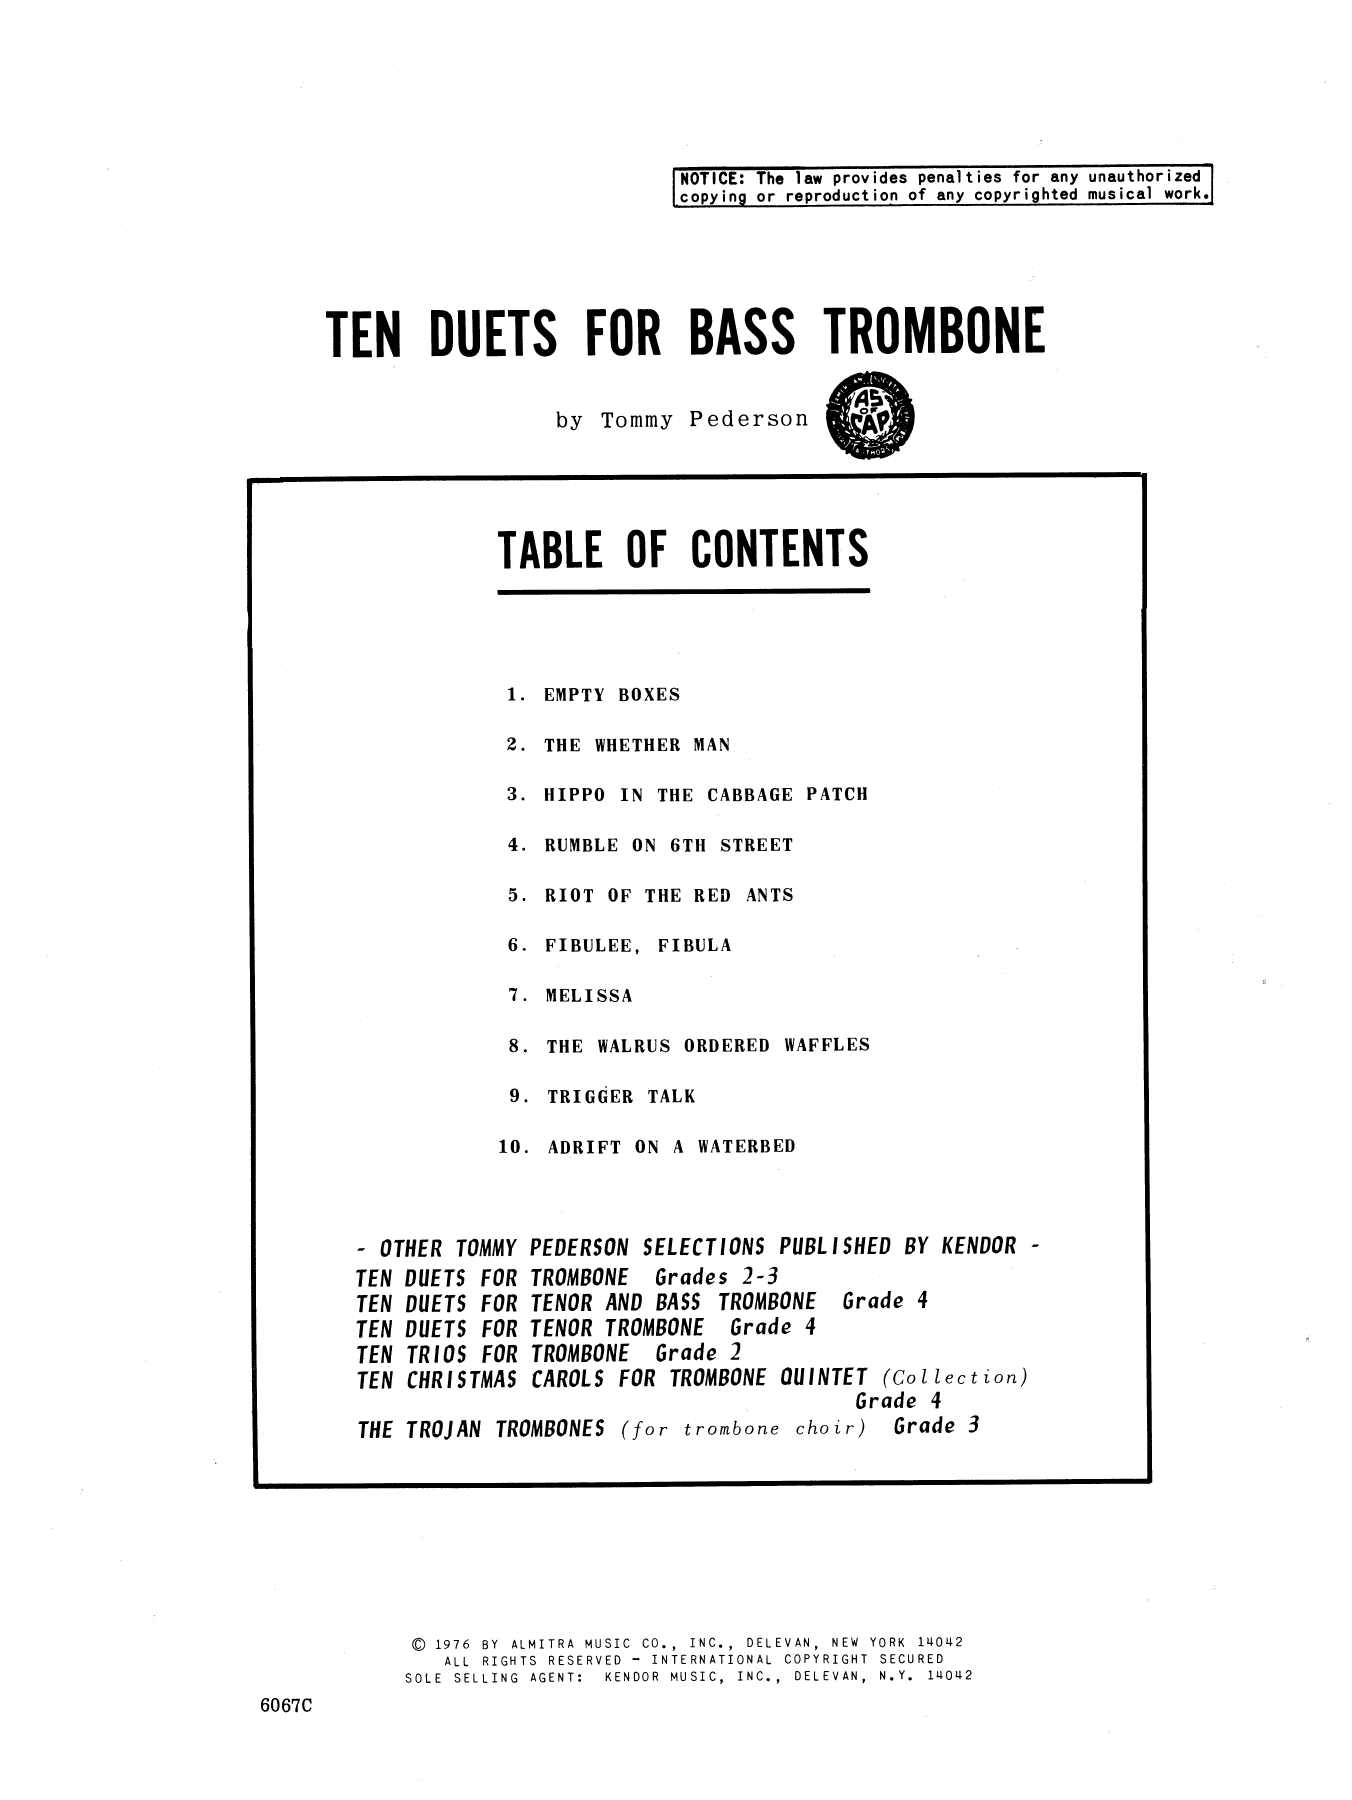 Download Tommy Pederson Ten Duets For Bass Trombone Sheet Music